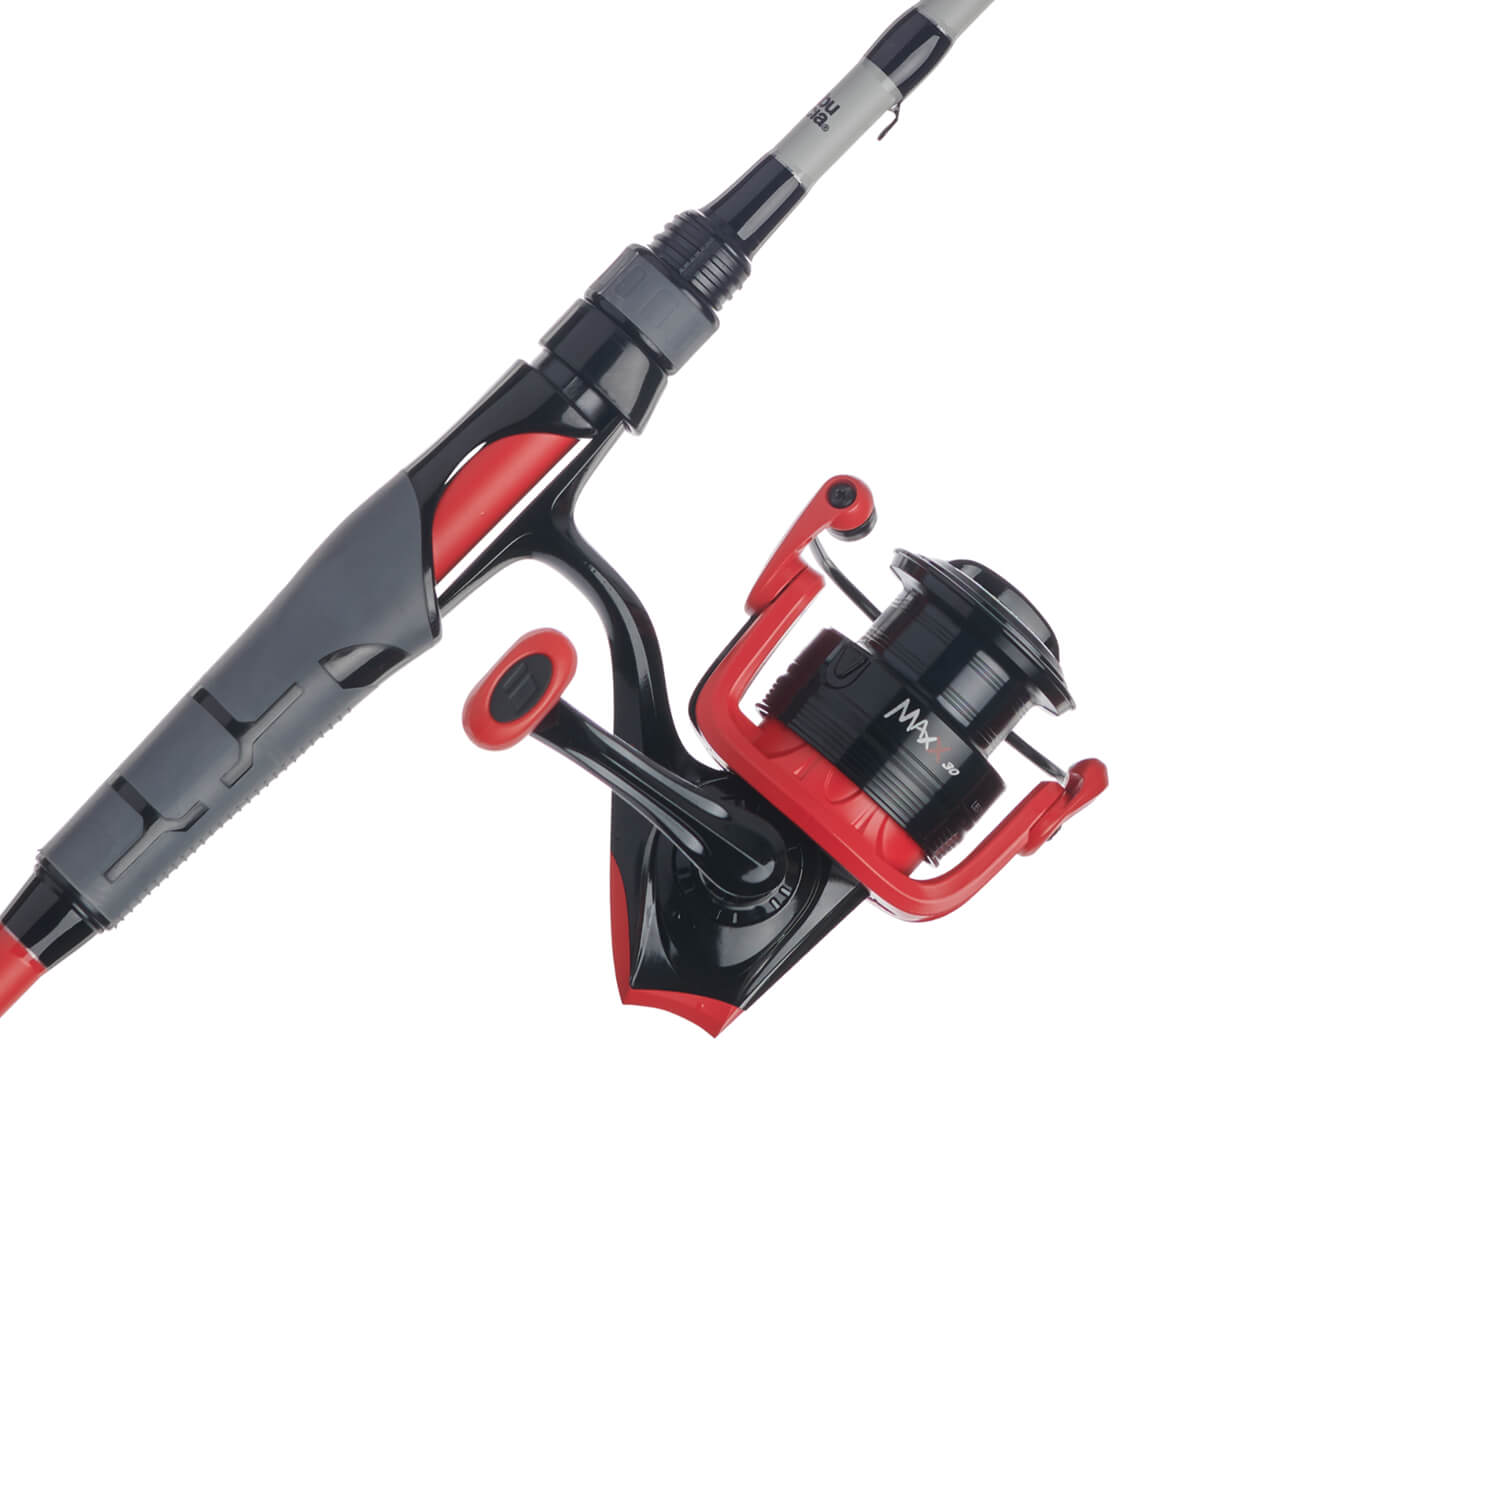  Z-MAN PJH15-02PK3 3070-0854 Power Finesse Fishing Equipment,  Black : Sports & Outdoors